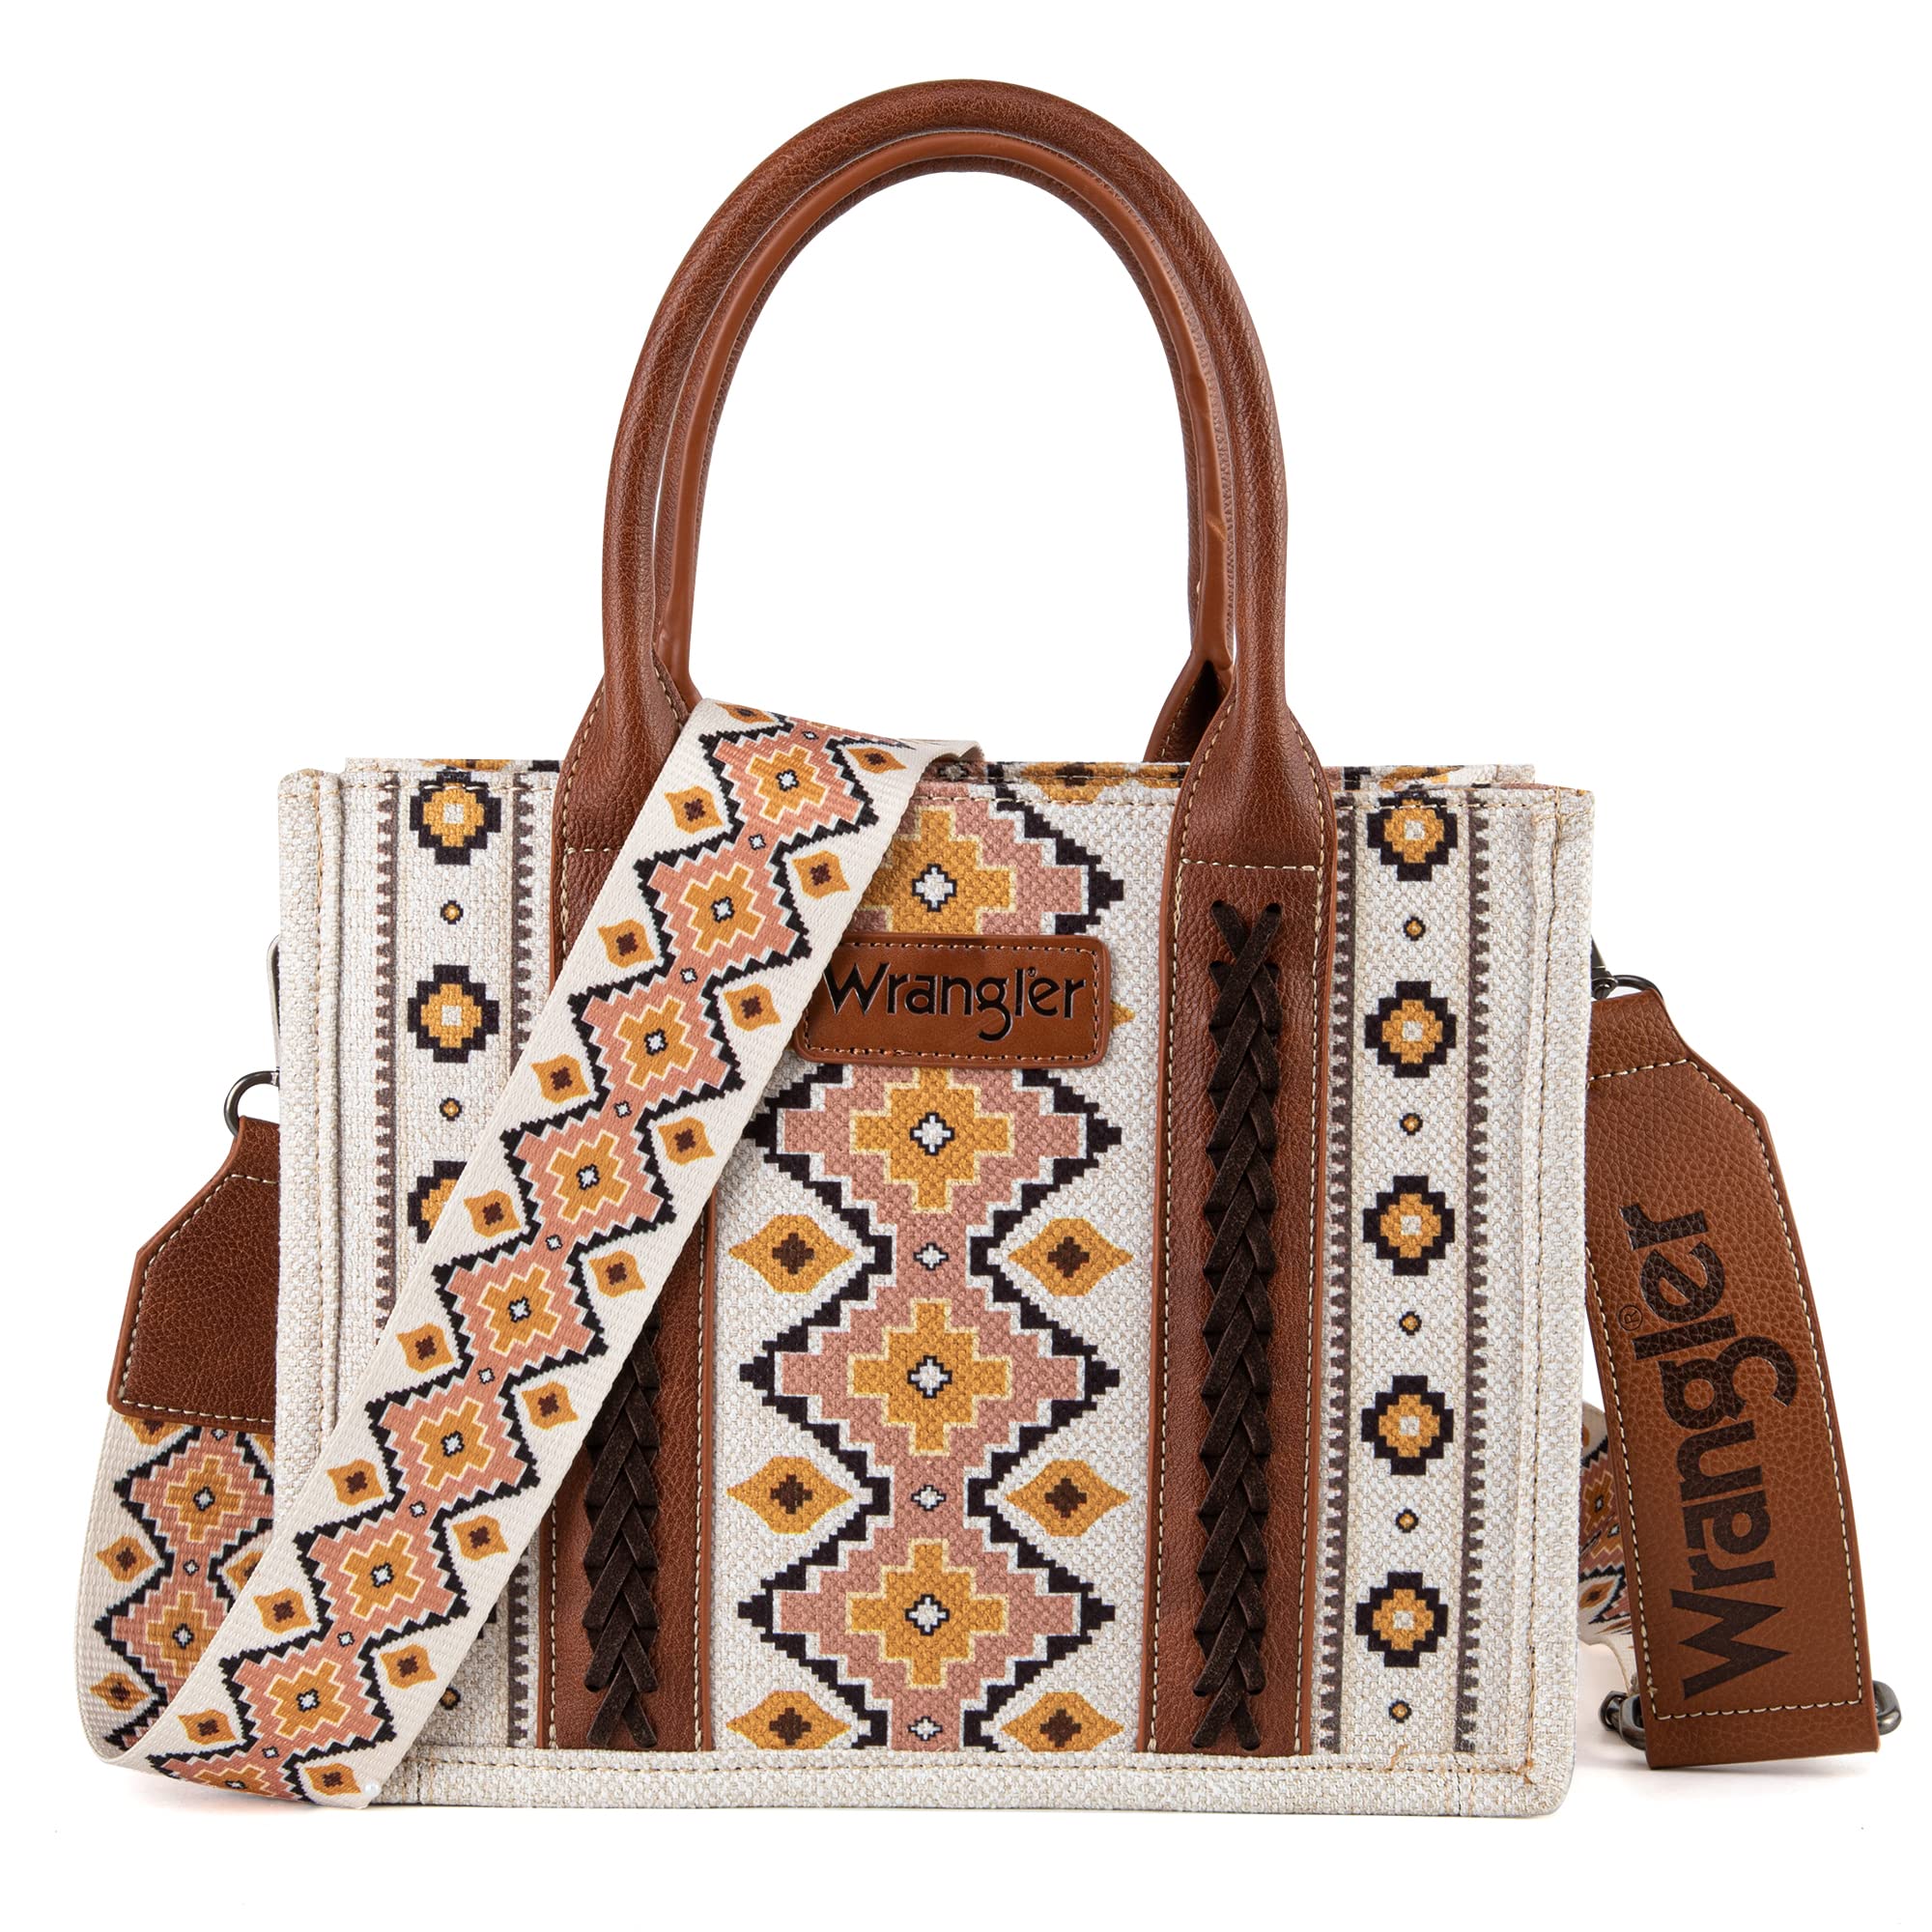 Wrangler Tote Bag Western Purses for Women Shoulder Boho Aztec Handbags